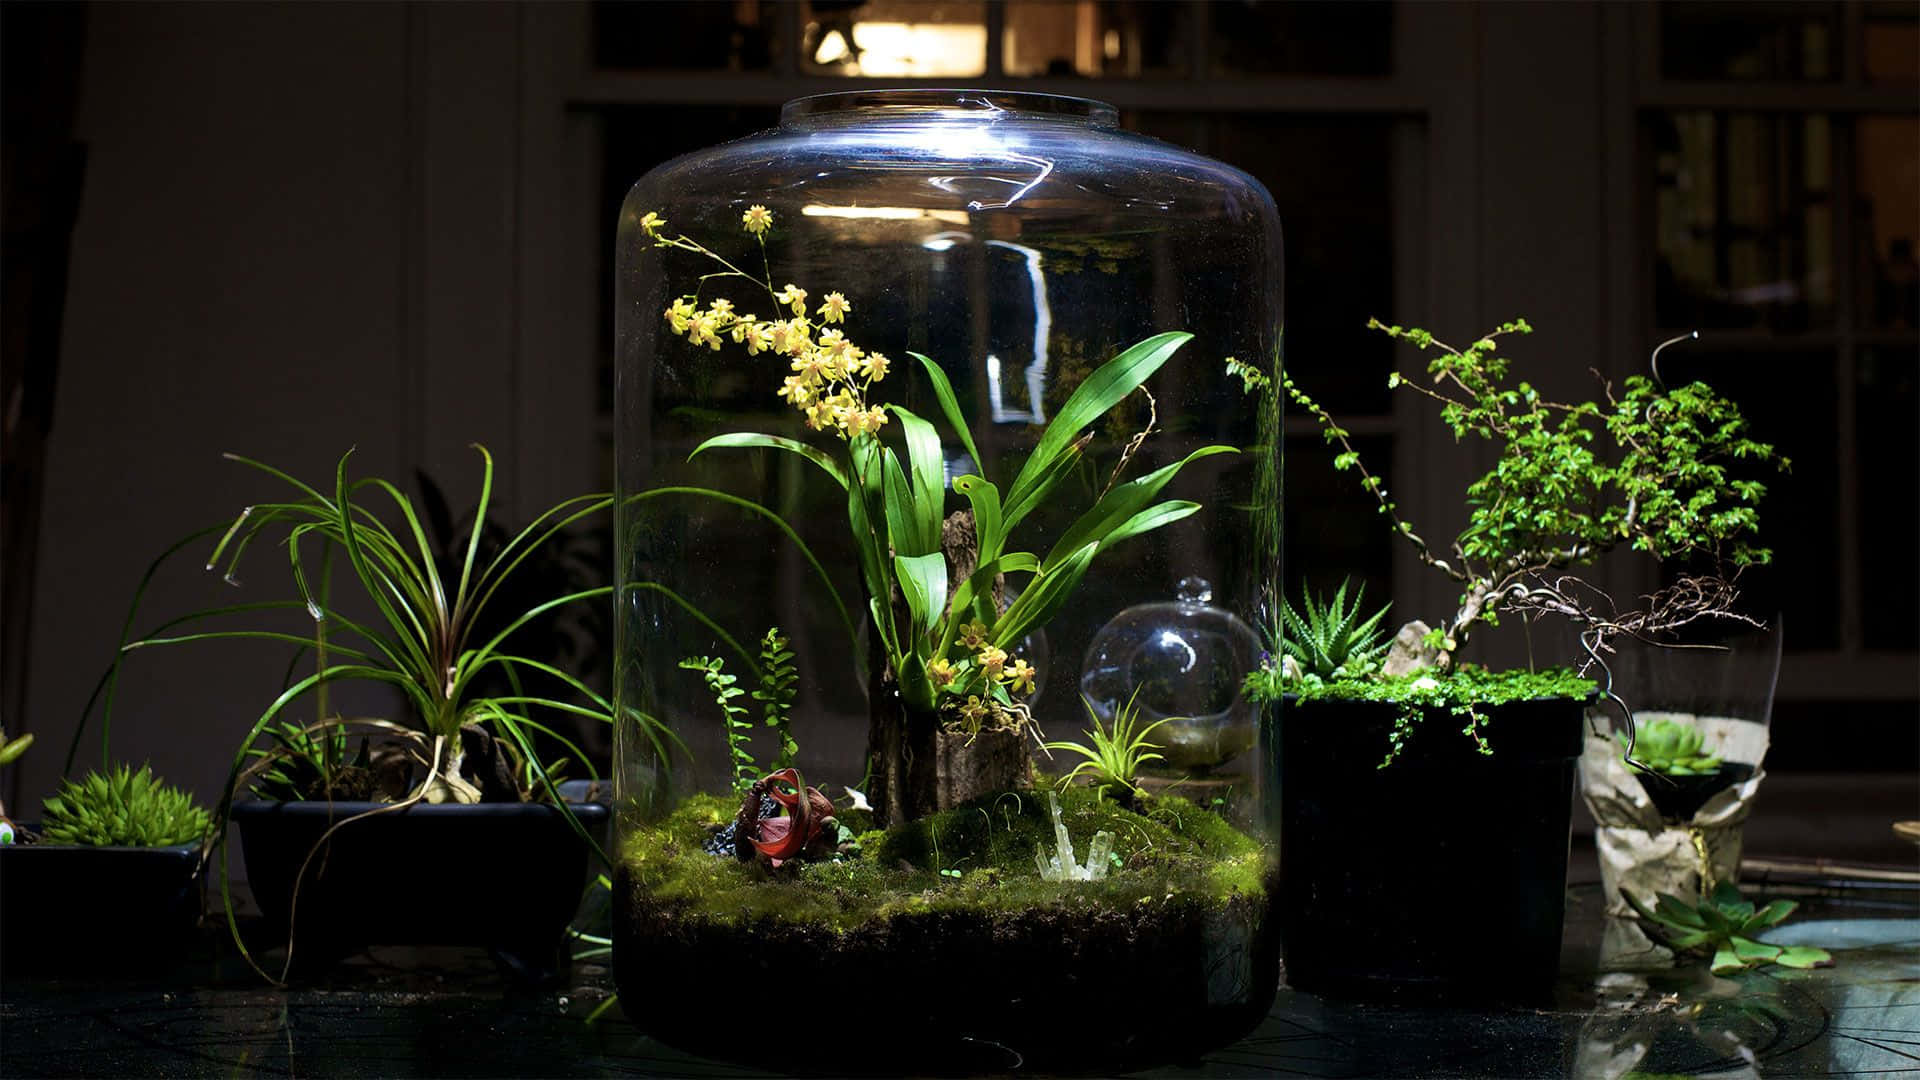 Image  A Crystal Terrarium, Full of Plants and Unique Stones